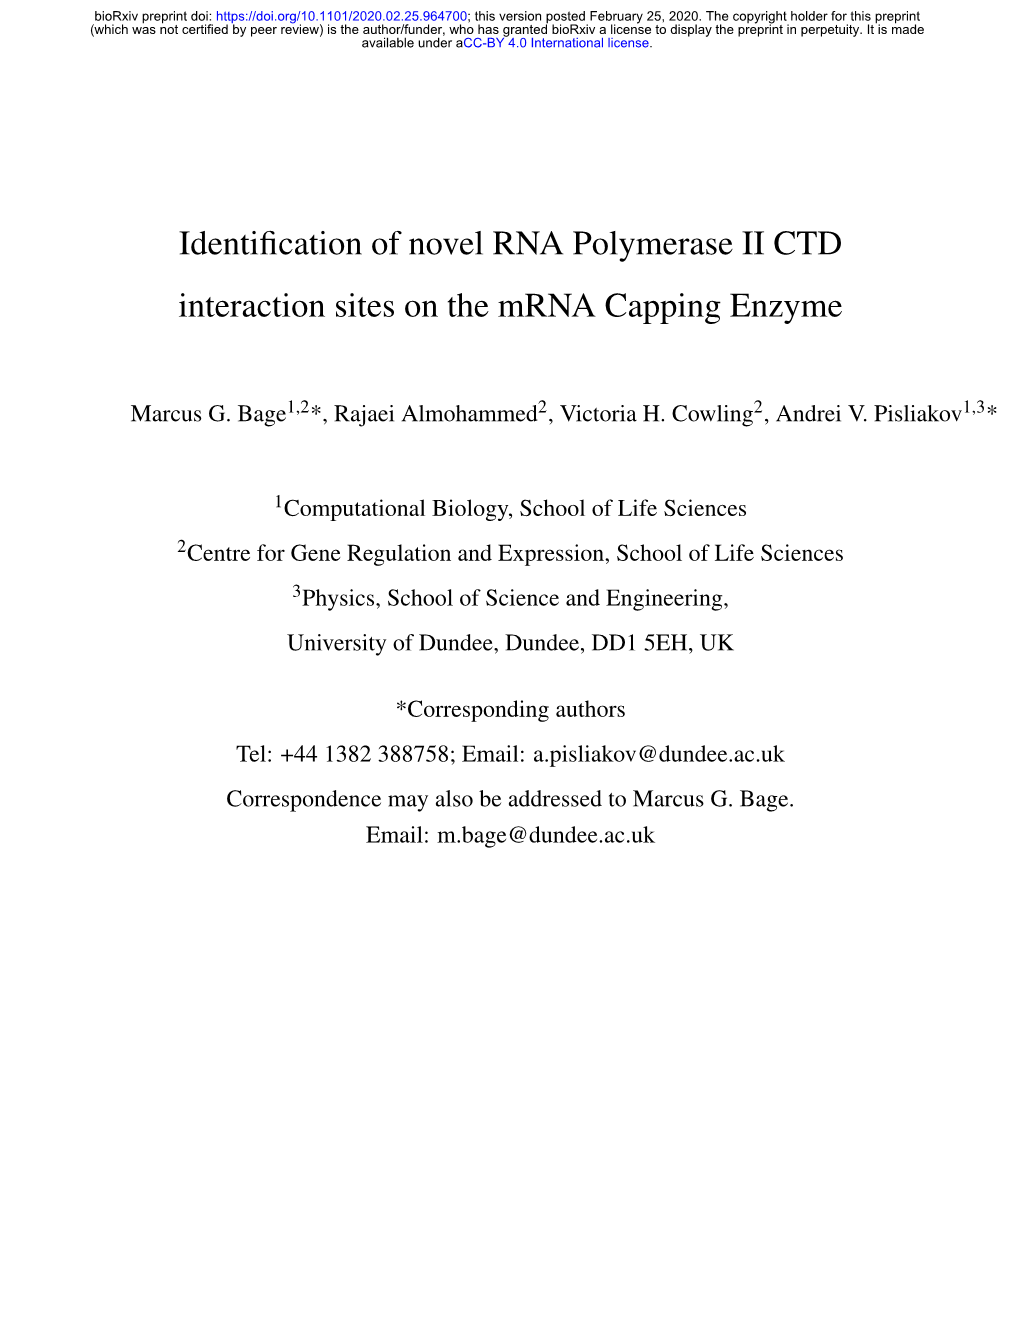 Identification of Novel RNA Polymerase II CTD